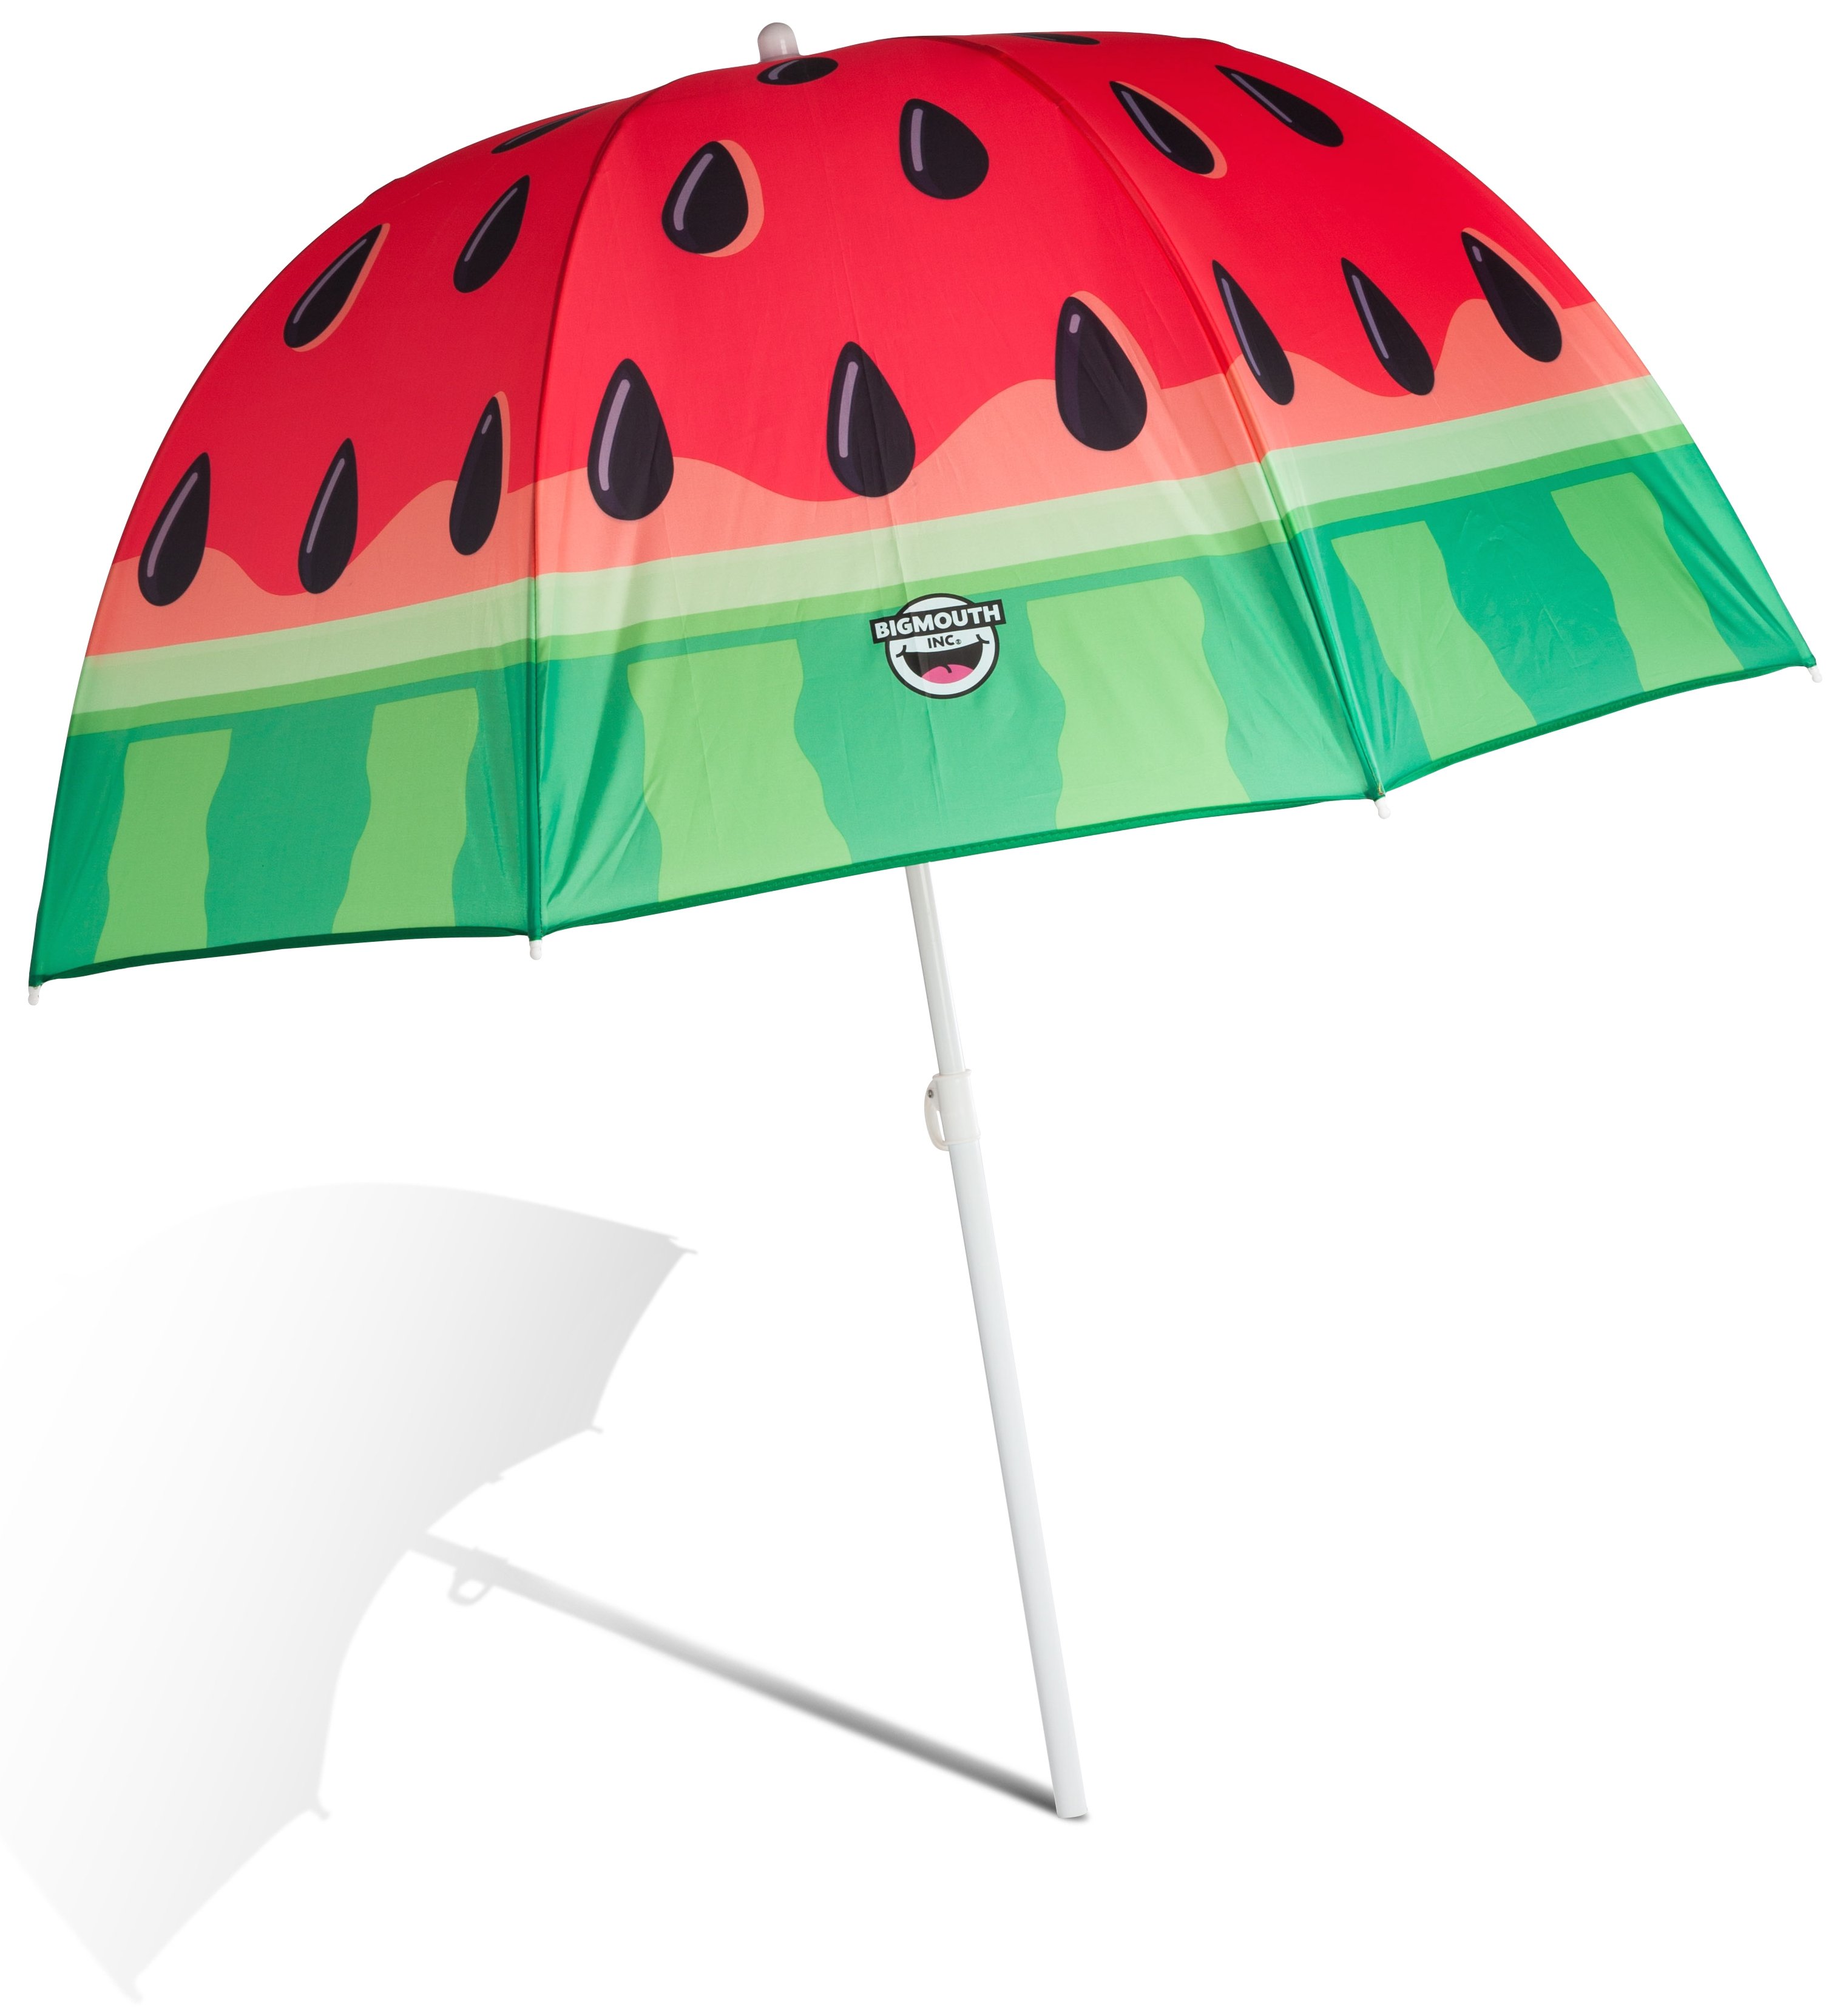 Juicy Watermelon Beach Umbrella - Big Mouth Toys - Big Mouth Inc ...